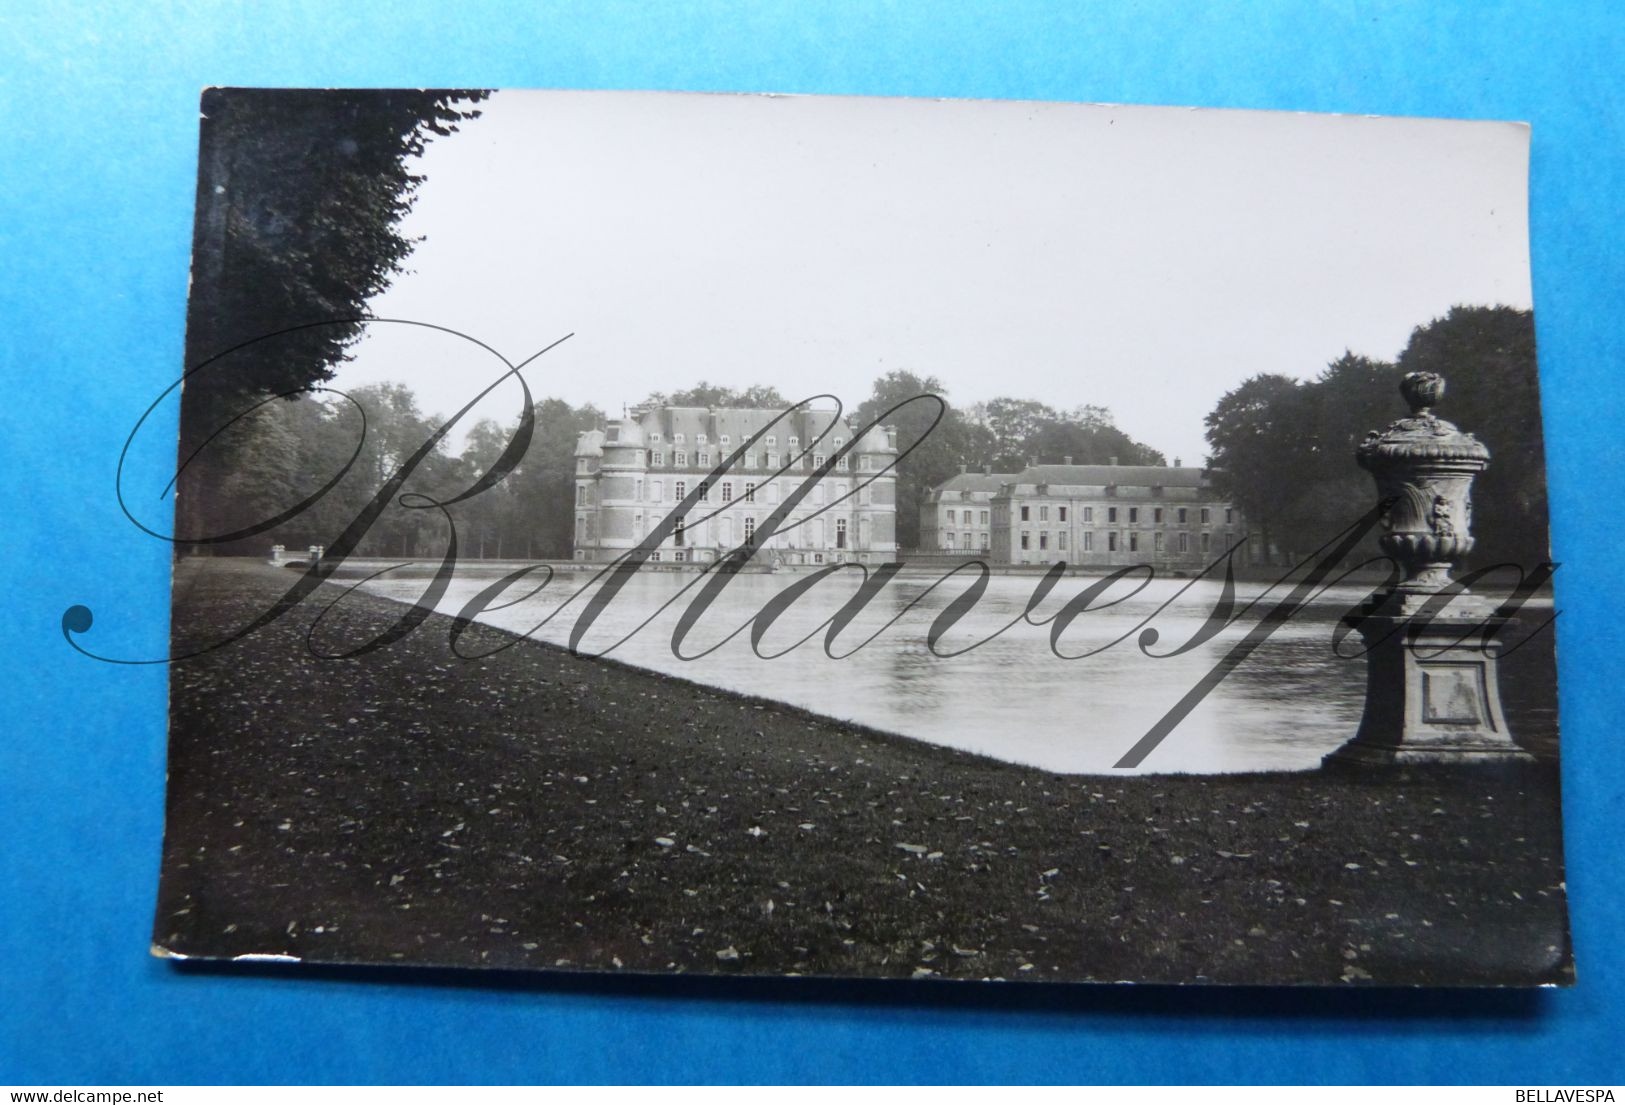 Beloeil delcourt  carte photo   precuseur ou epreuve   x 5 piece -cpa